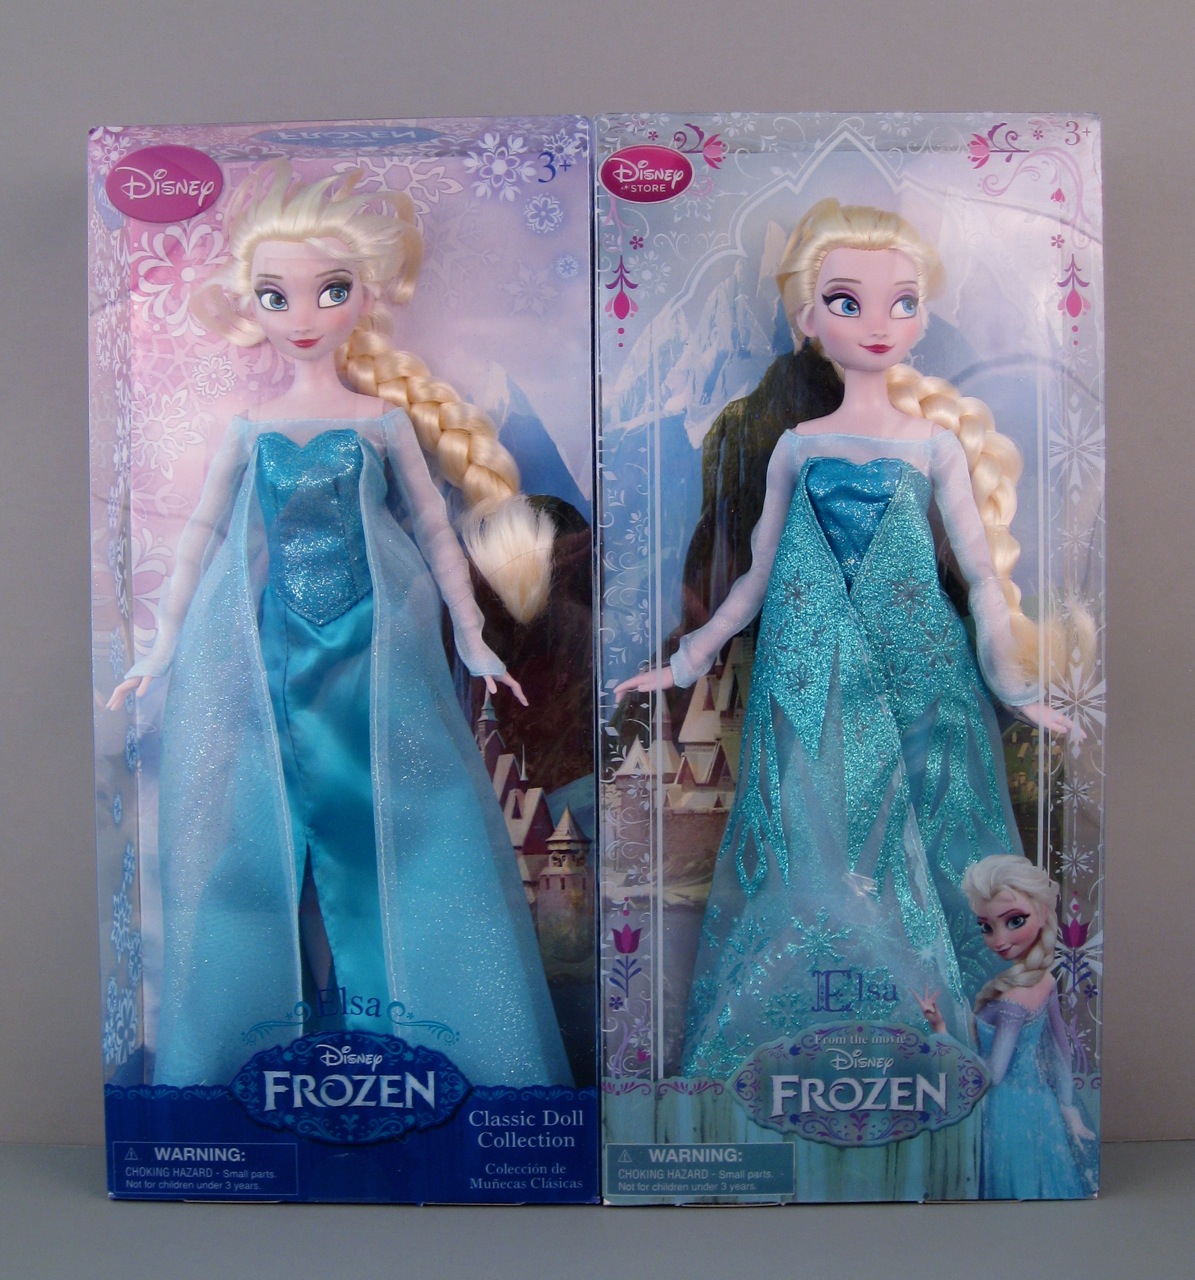 Elsa doll comparison